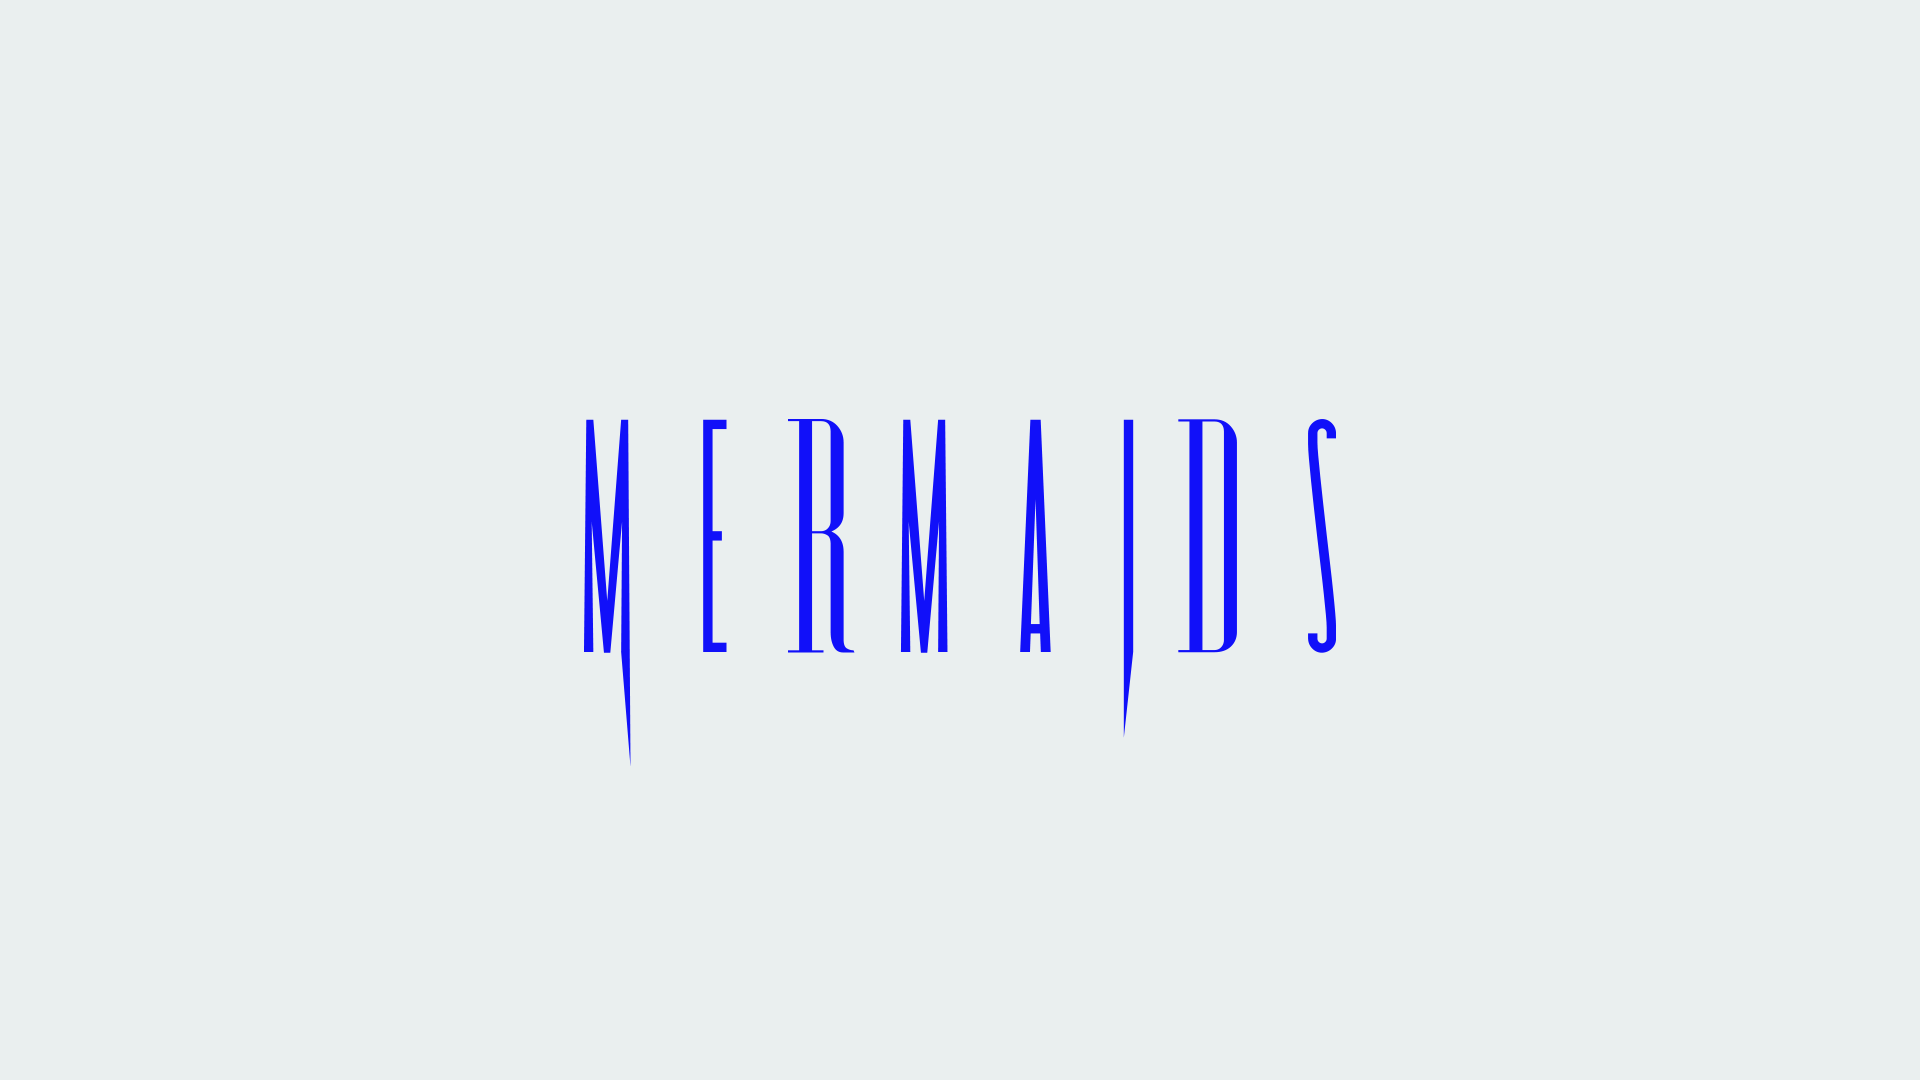 marks_mermaids_rev